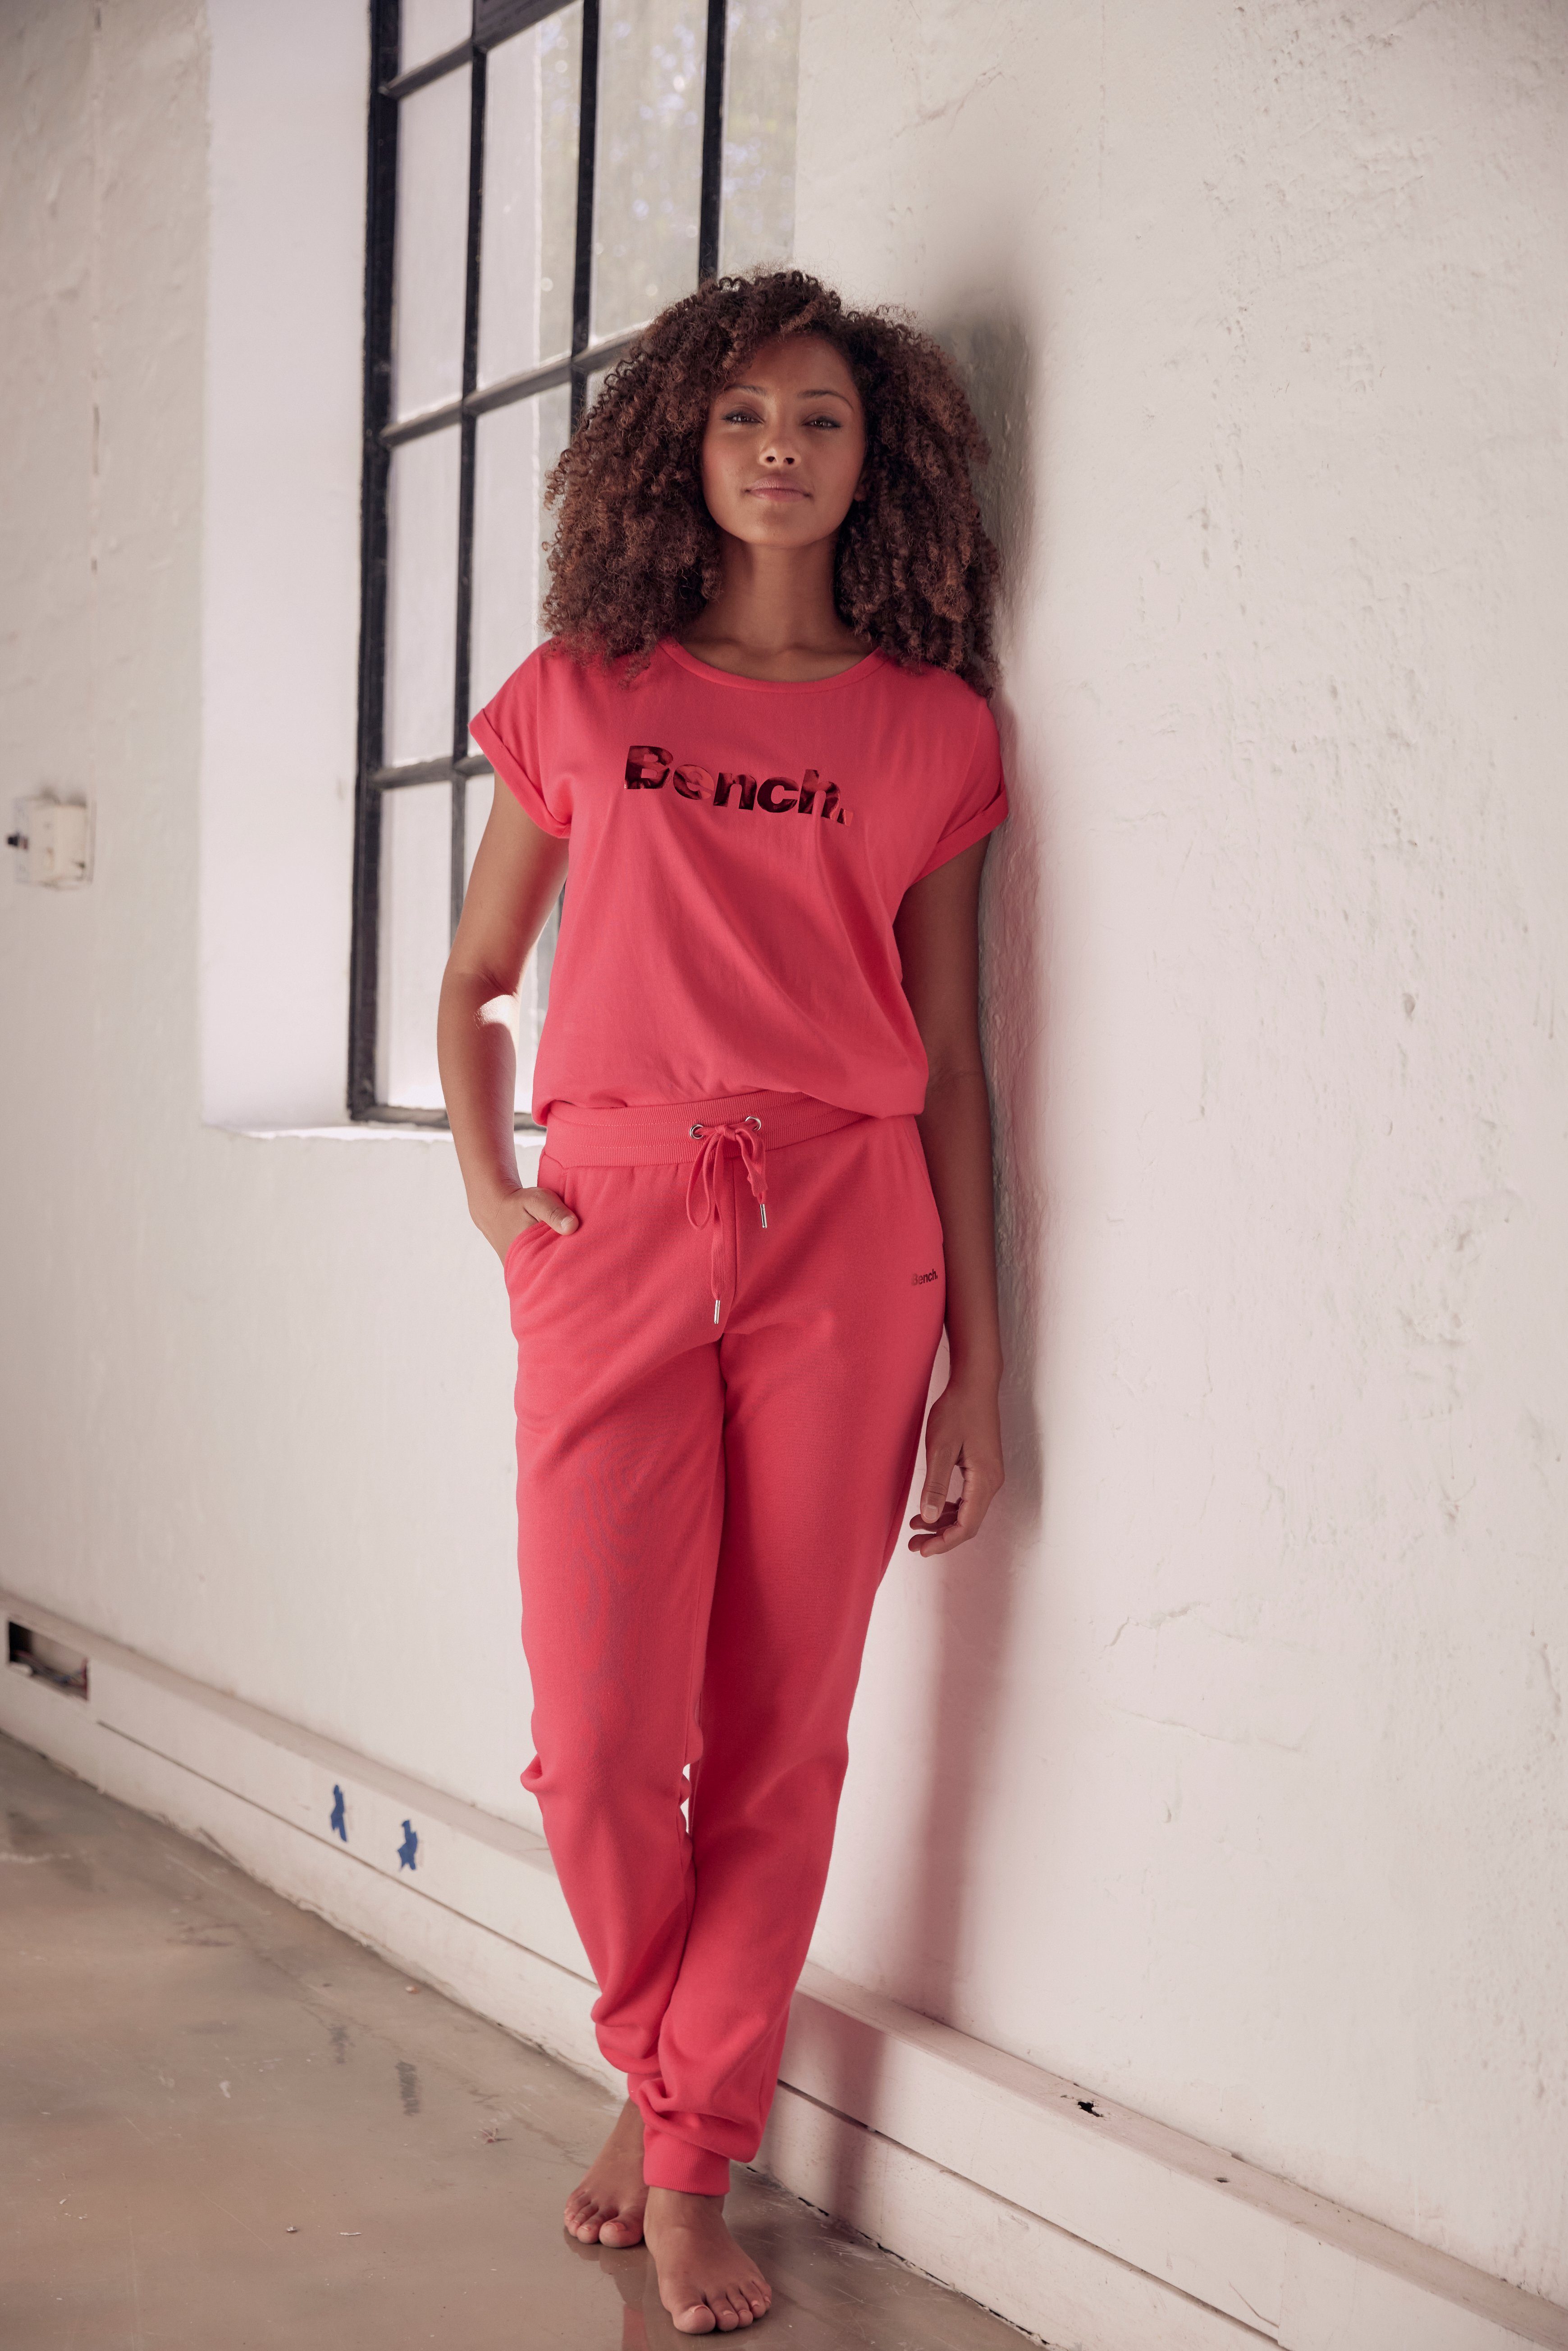 T-Shirt Bench. mit Loungewear Logodruck, glänzendem pink -Kurzarmshirt, Loungewear Loungeshirt